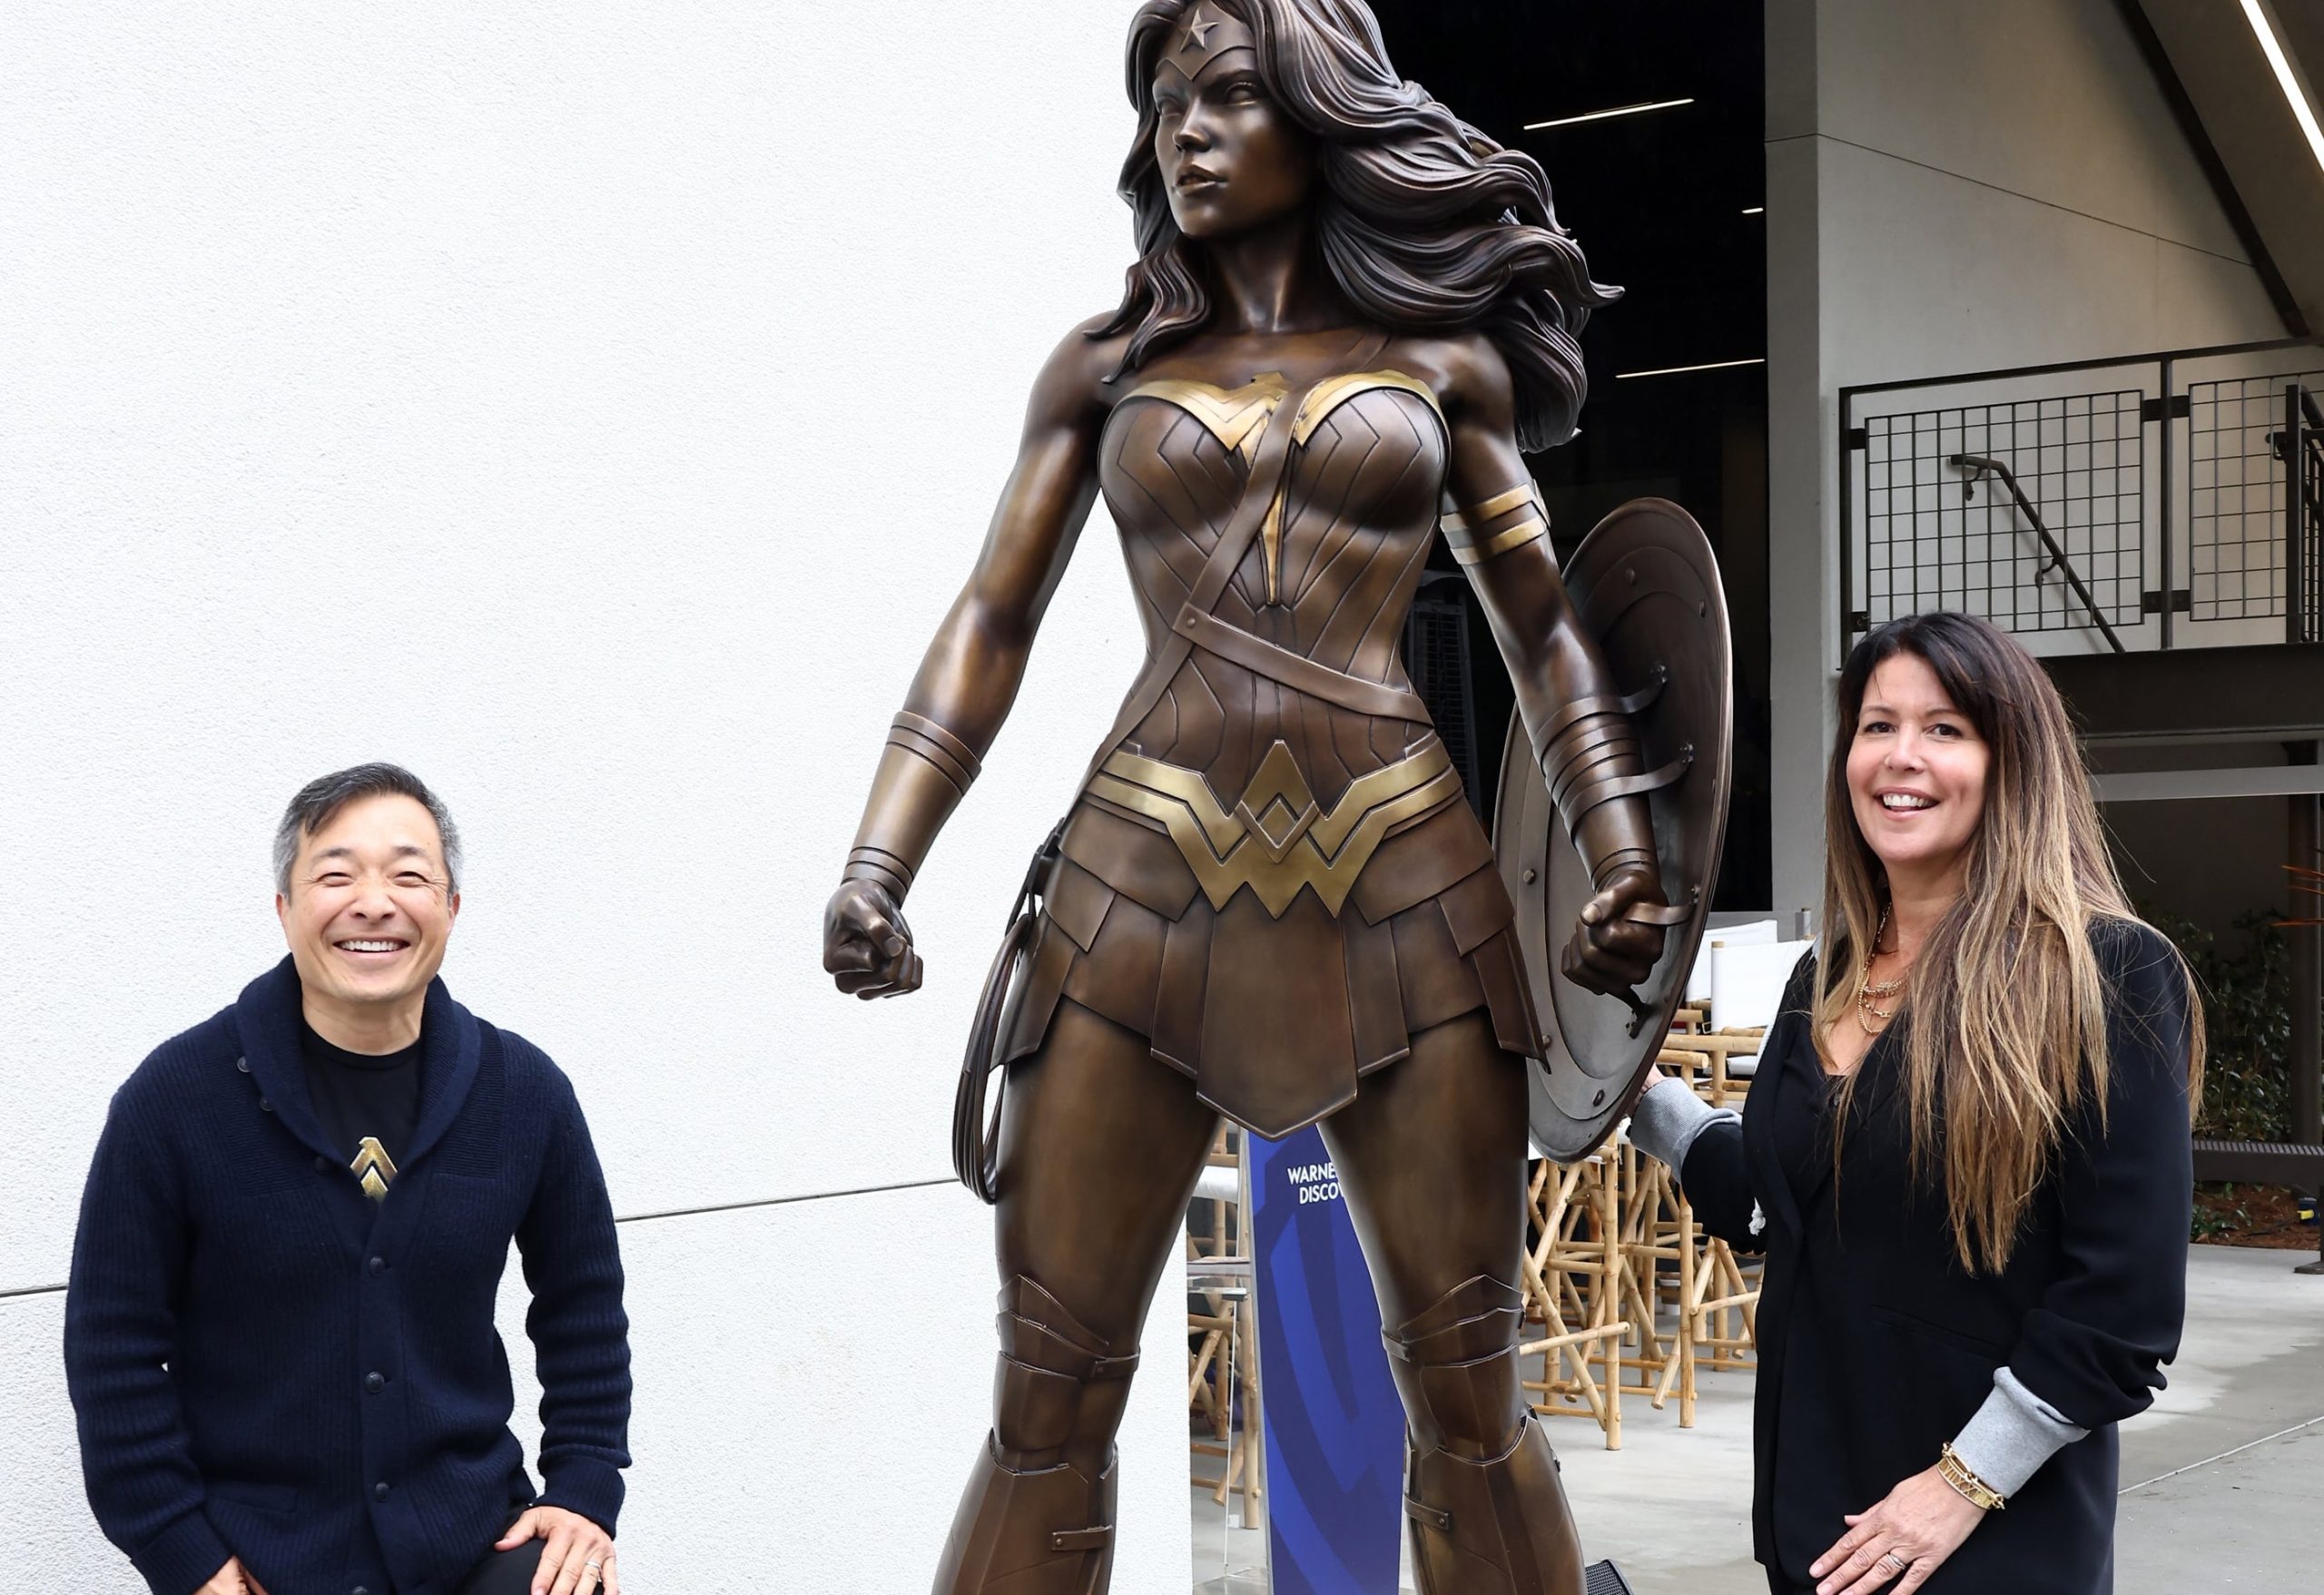 DC Comics and Burbank city team up for 600-pound bronze Wonder Woman statue